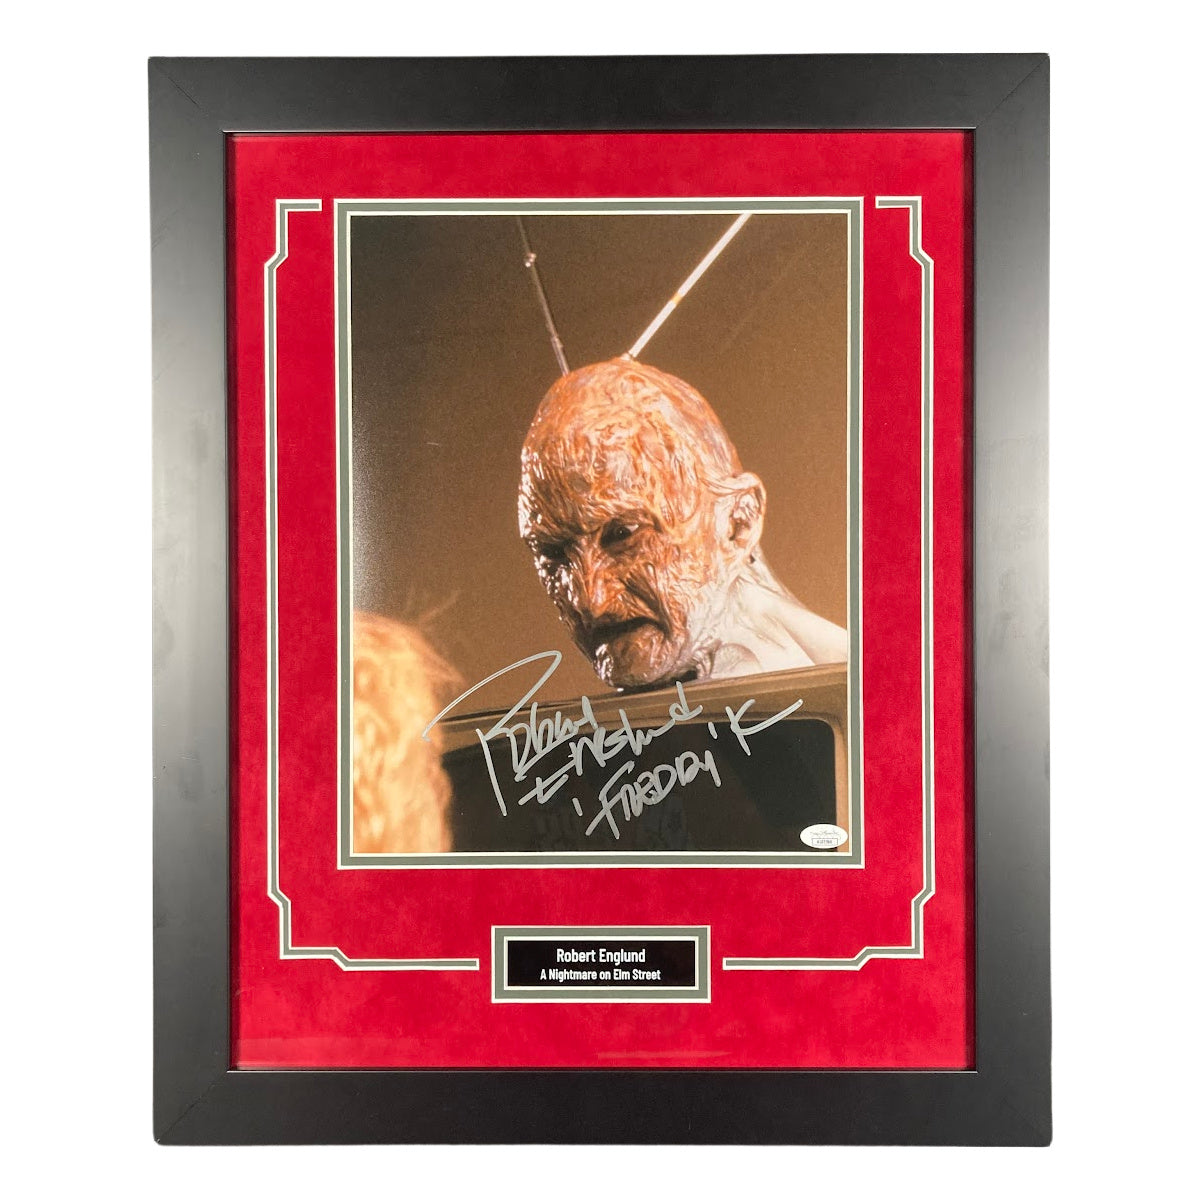 Robert Englund Signed 11x14 Photo A Nightmare on Elm Street Autographed JSA COA 2